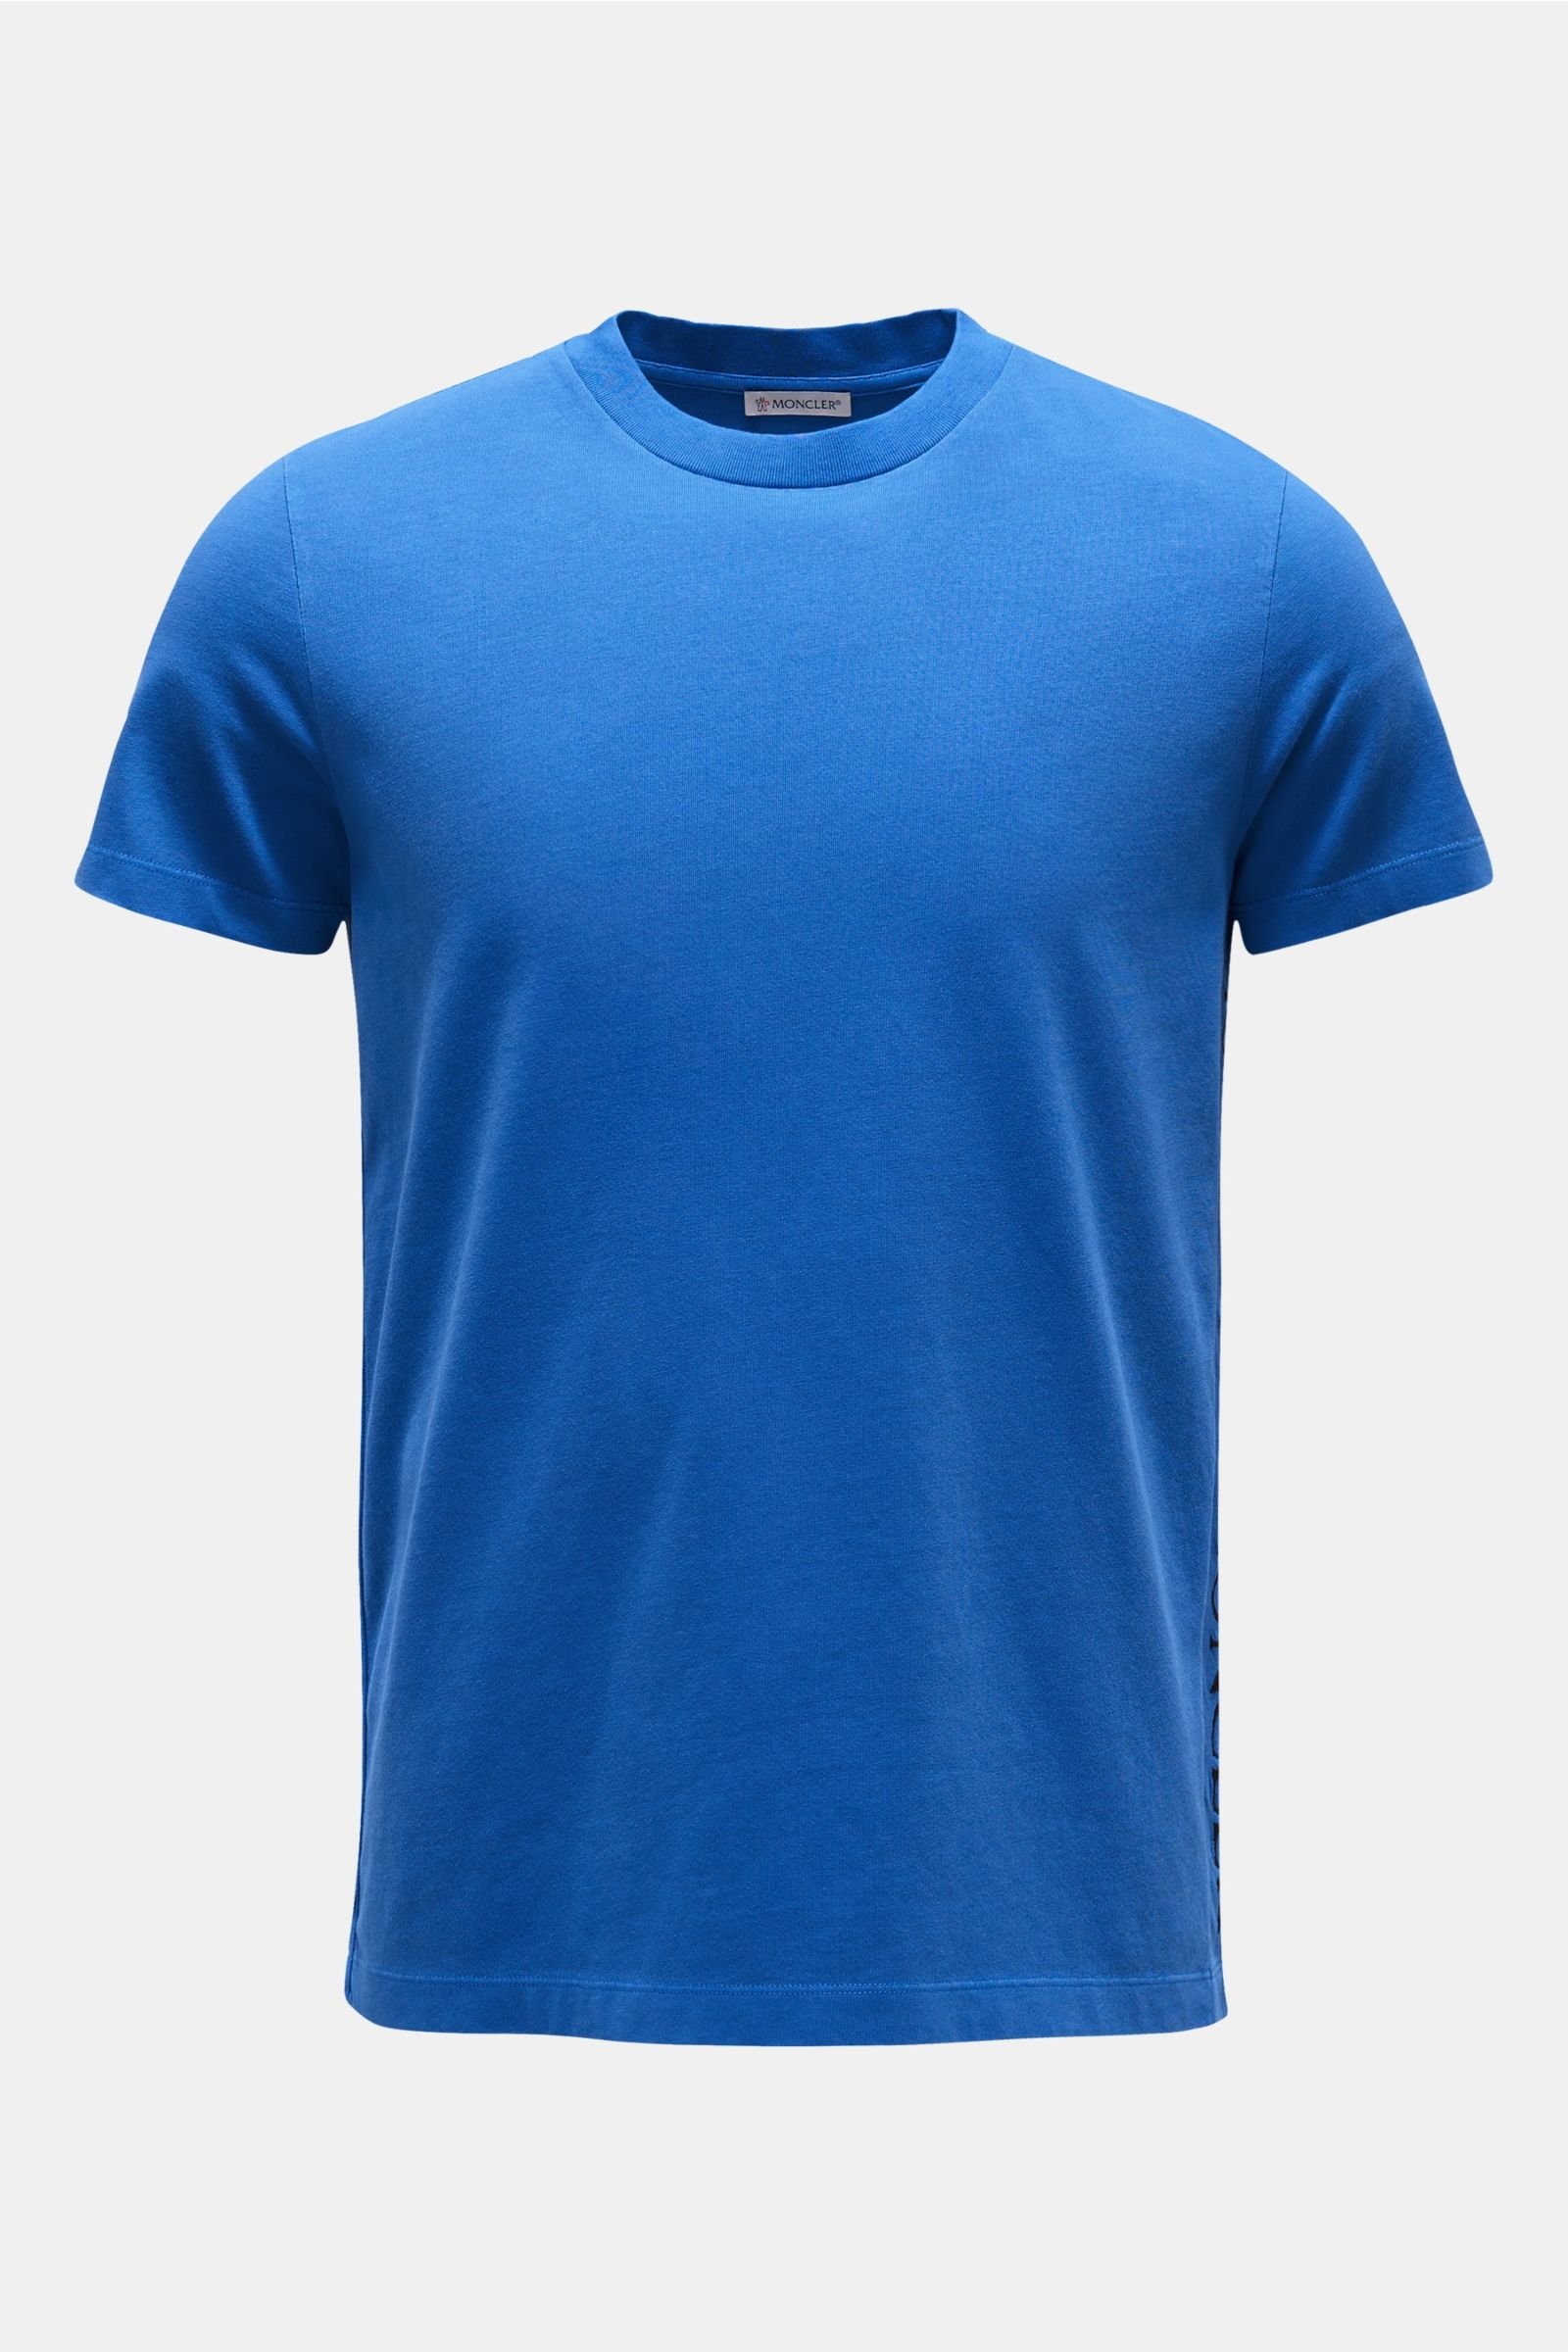 Crew neck T-shirt blue